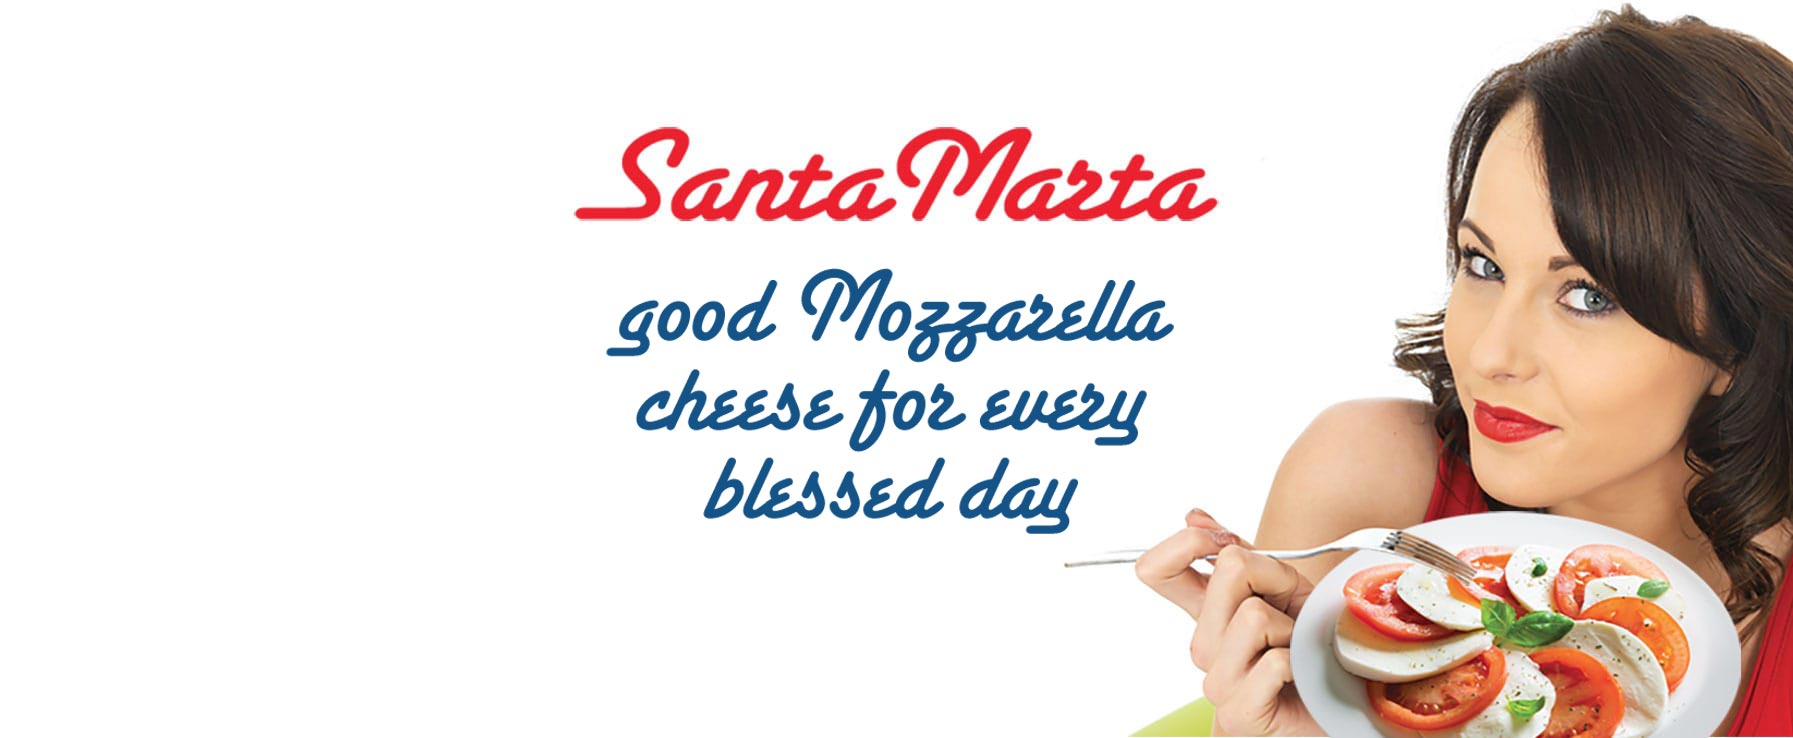 Santa Marta - good mozzarella cheese for every blessed day